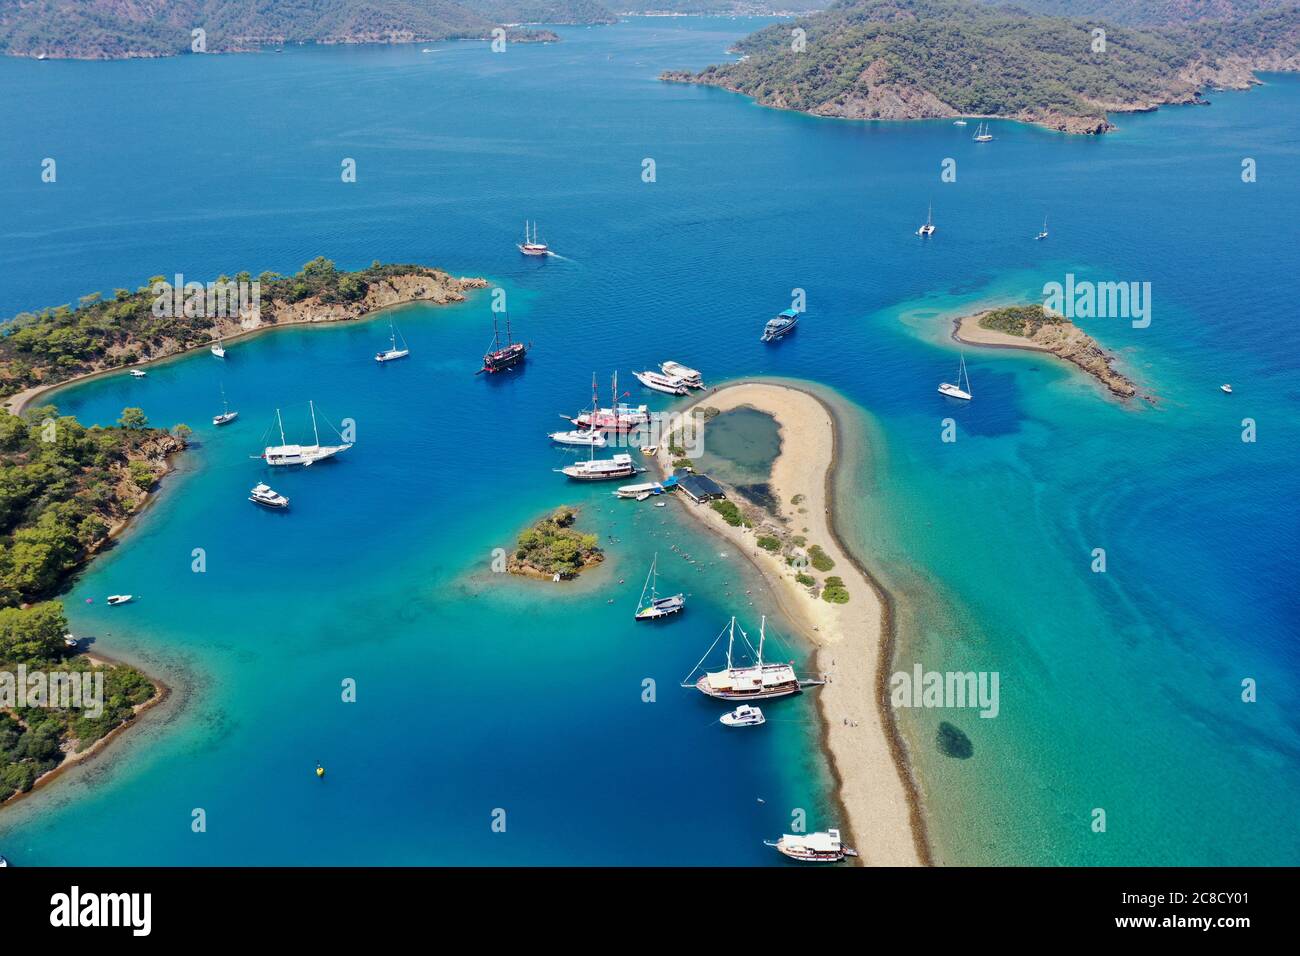 Aerial view of Yassıca Islands of Gocek Fethiye Turkey. Stock Photo